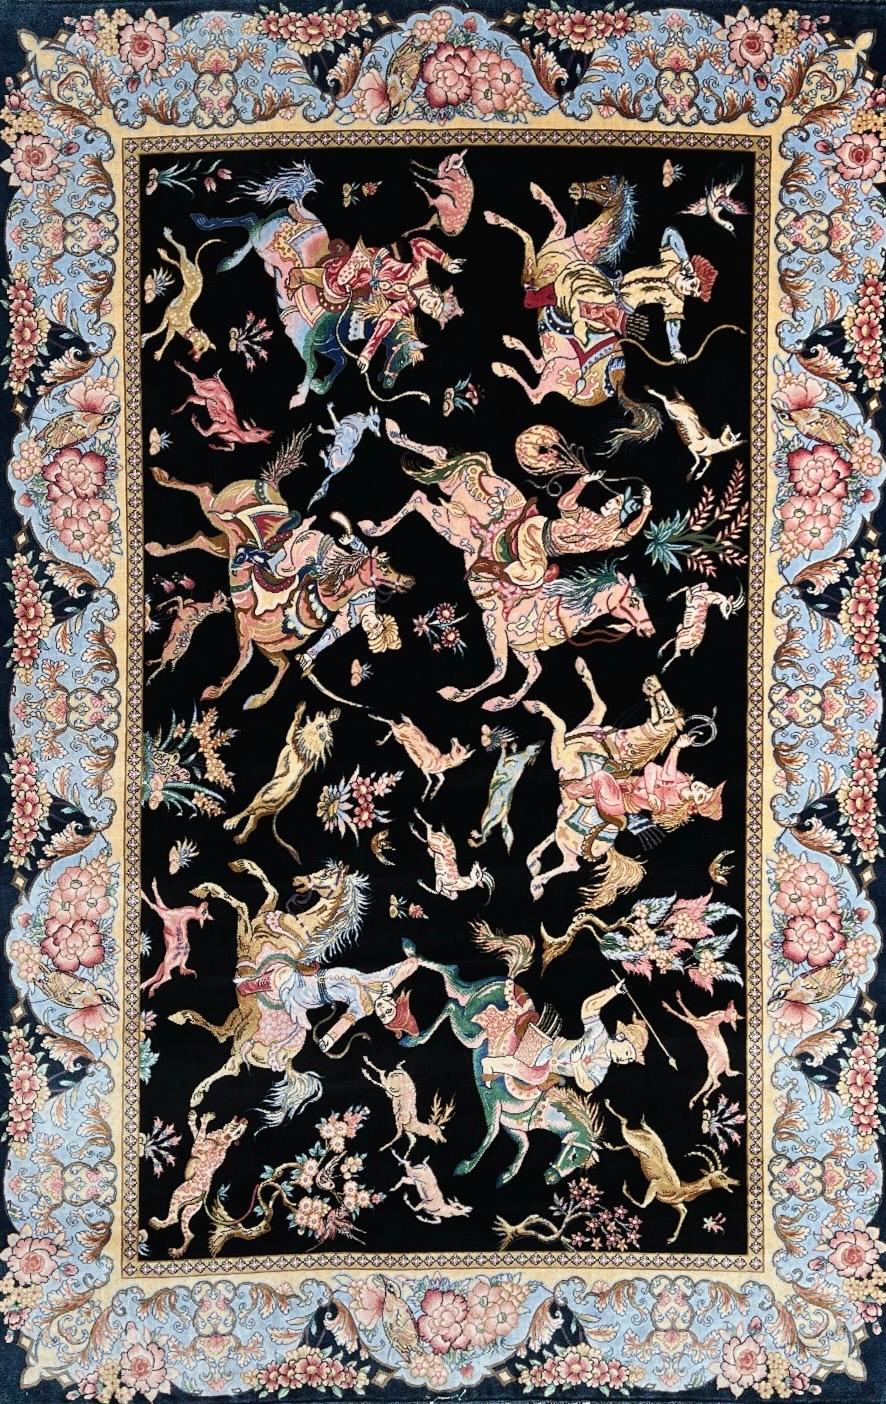 Indo-Persian Ghoum silk carpet.
Carpet with 